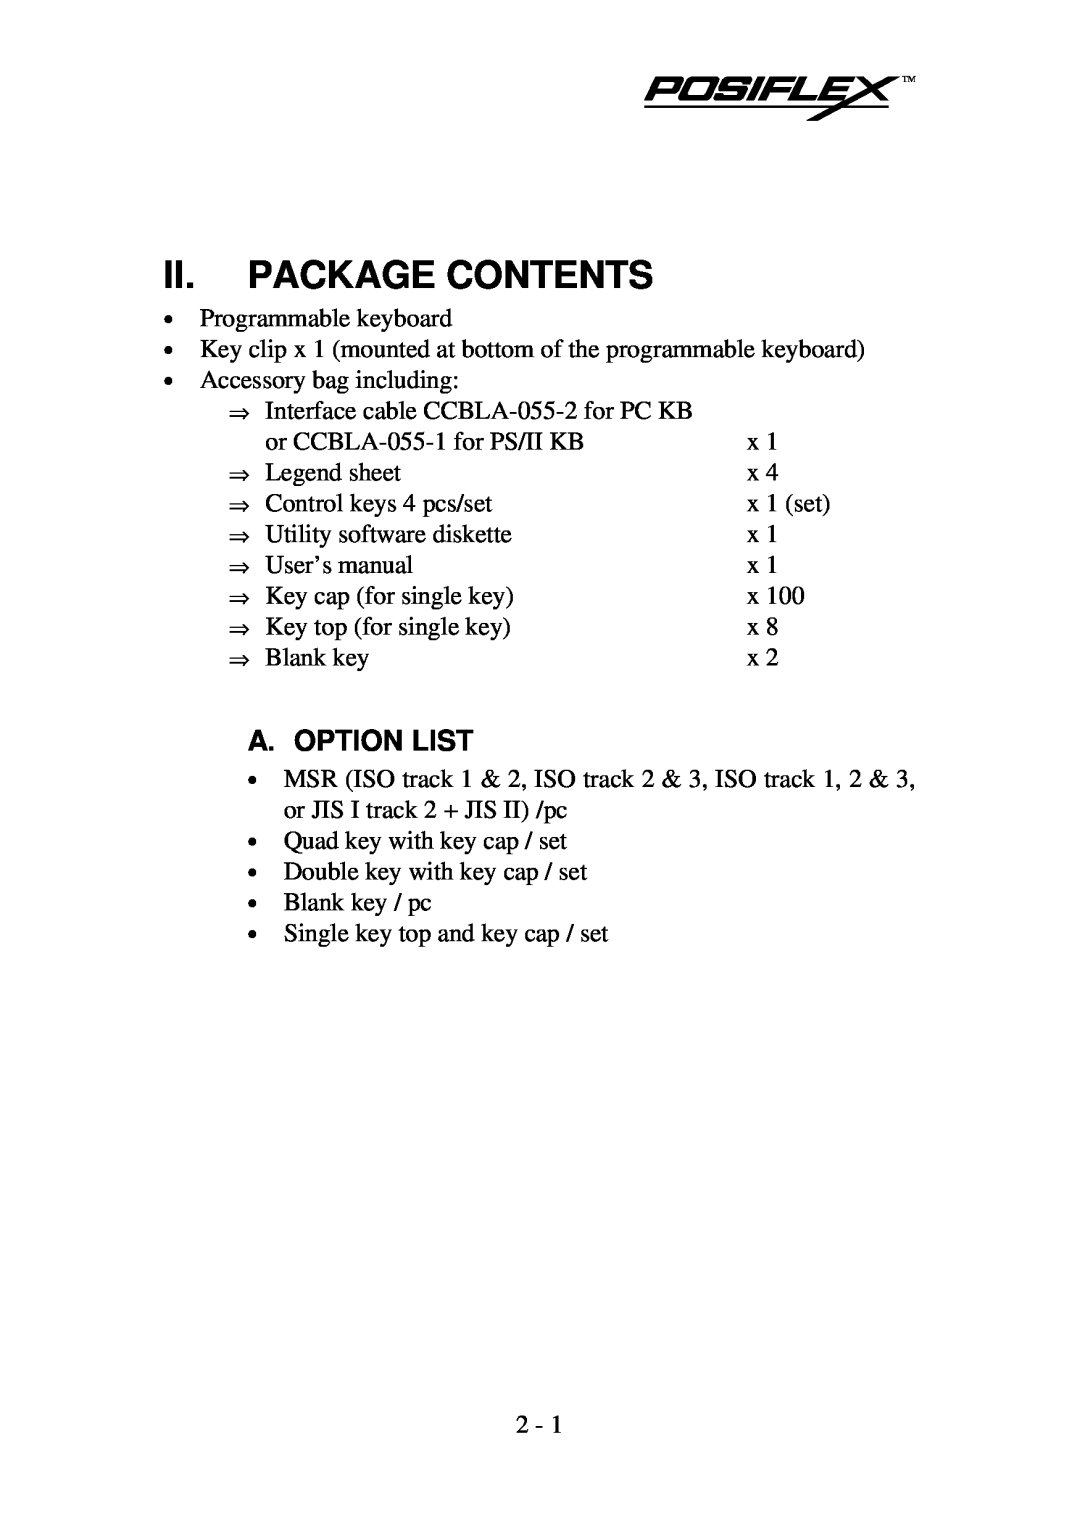 Mustek KB3100 user manual Ii. Package Contents, A. Option List 